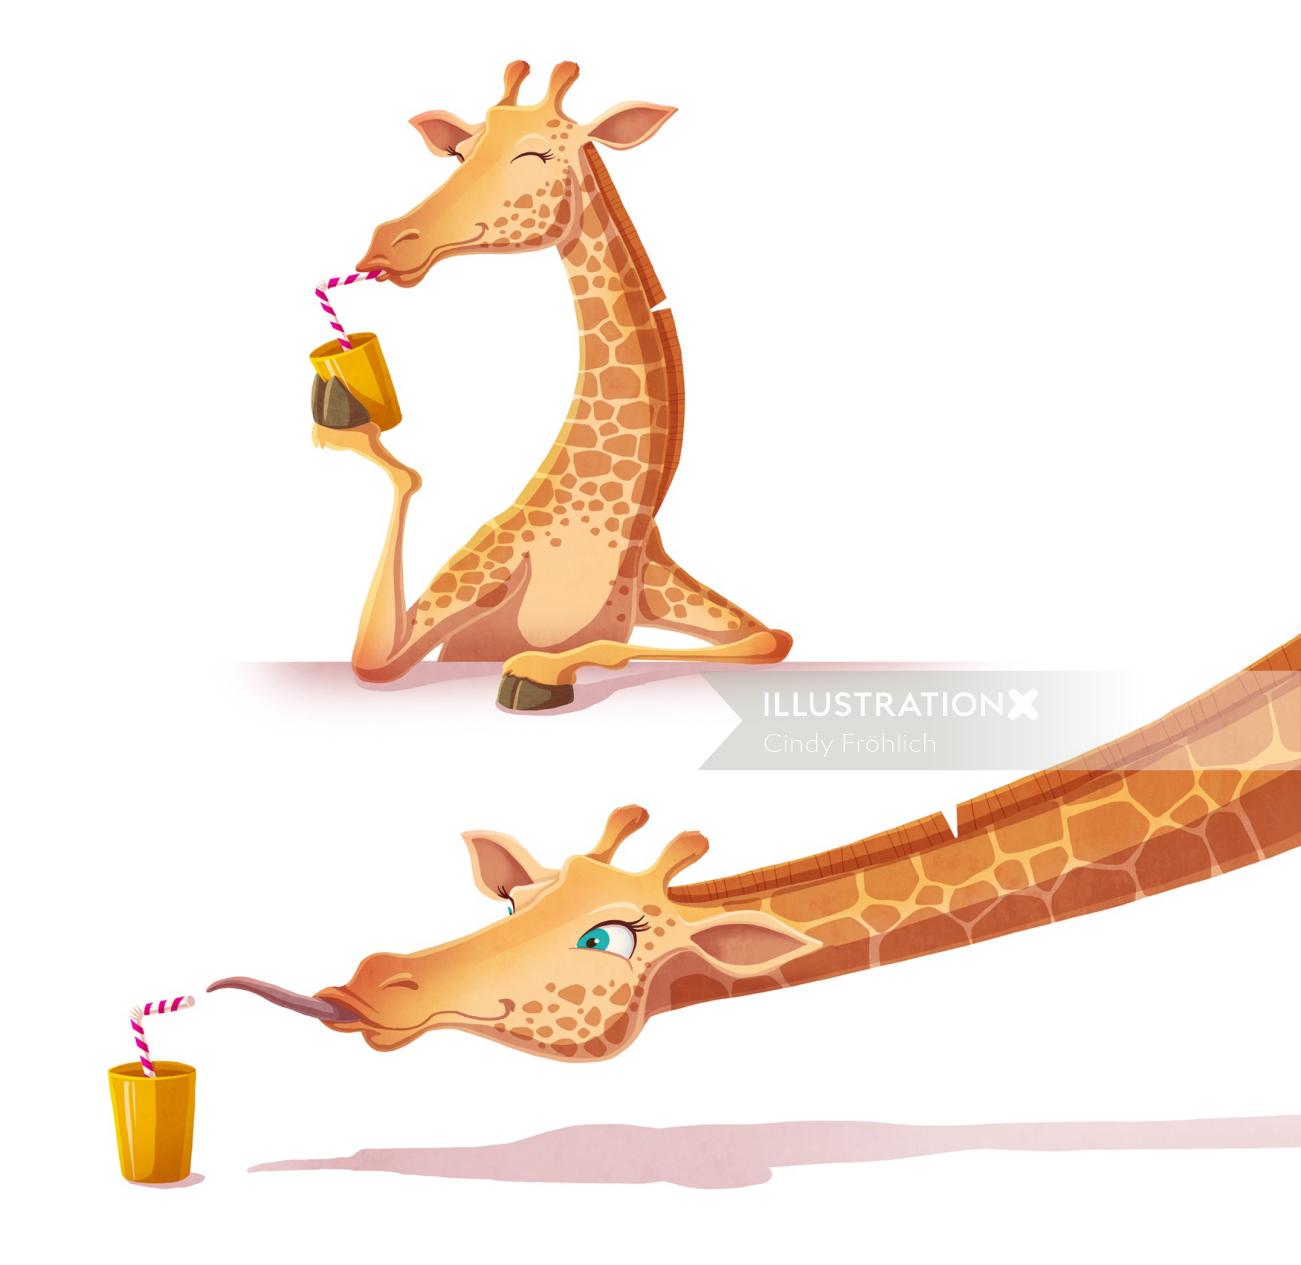 Animal character design of Giraffe